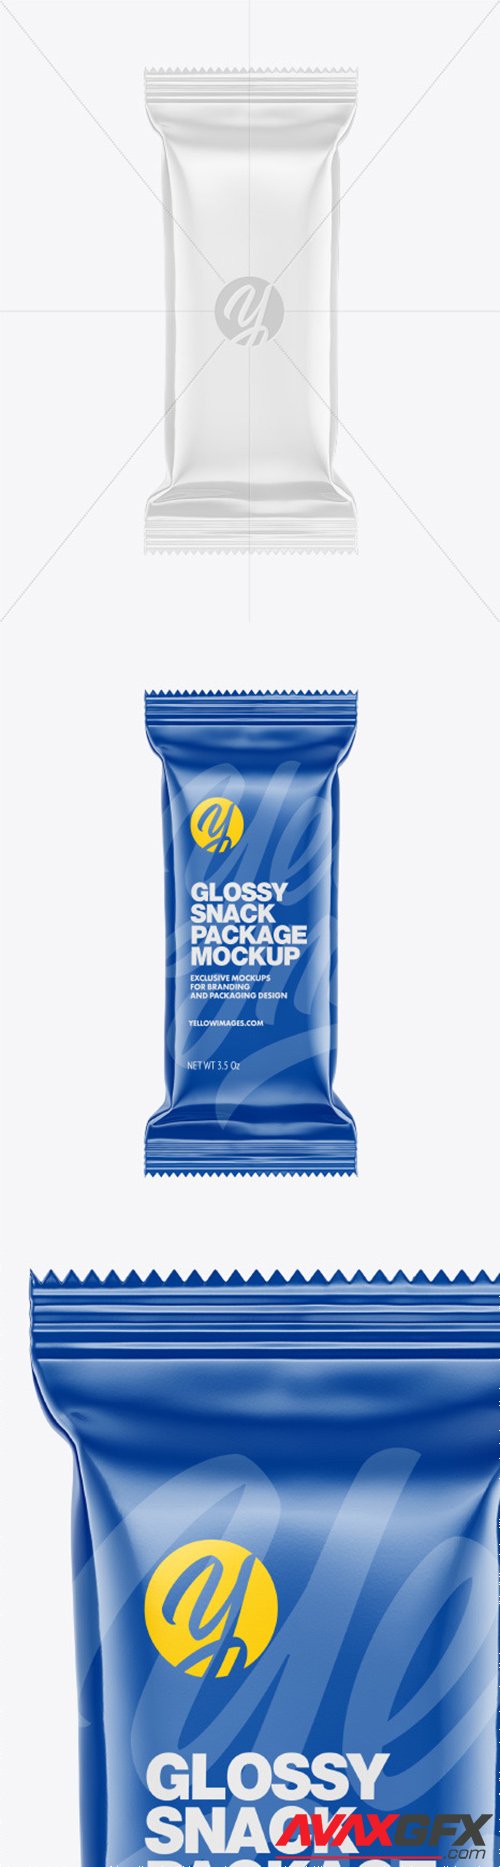 Glossy Snack Package Mockup 78739 TIF